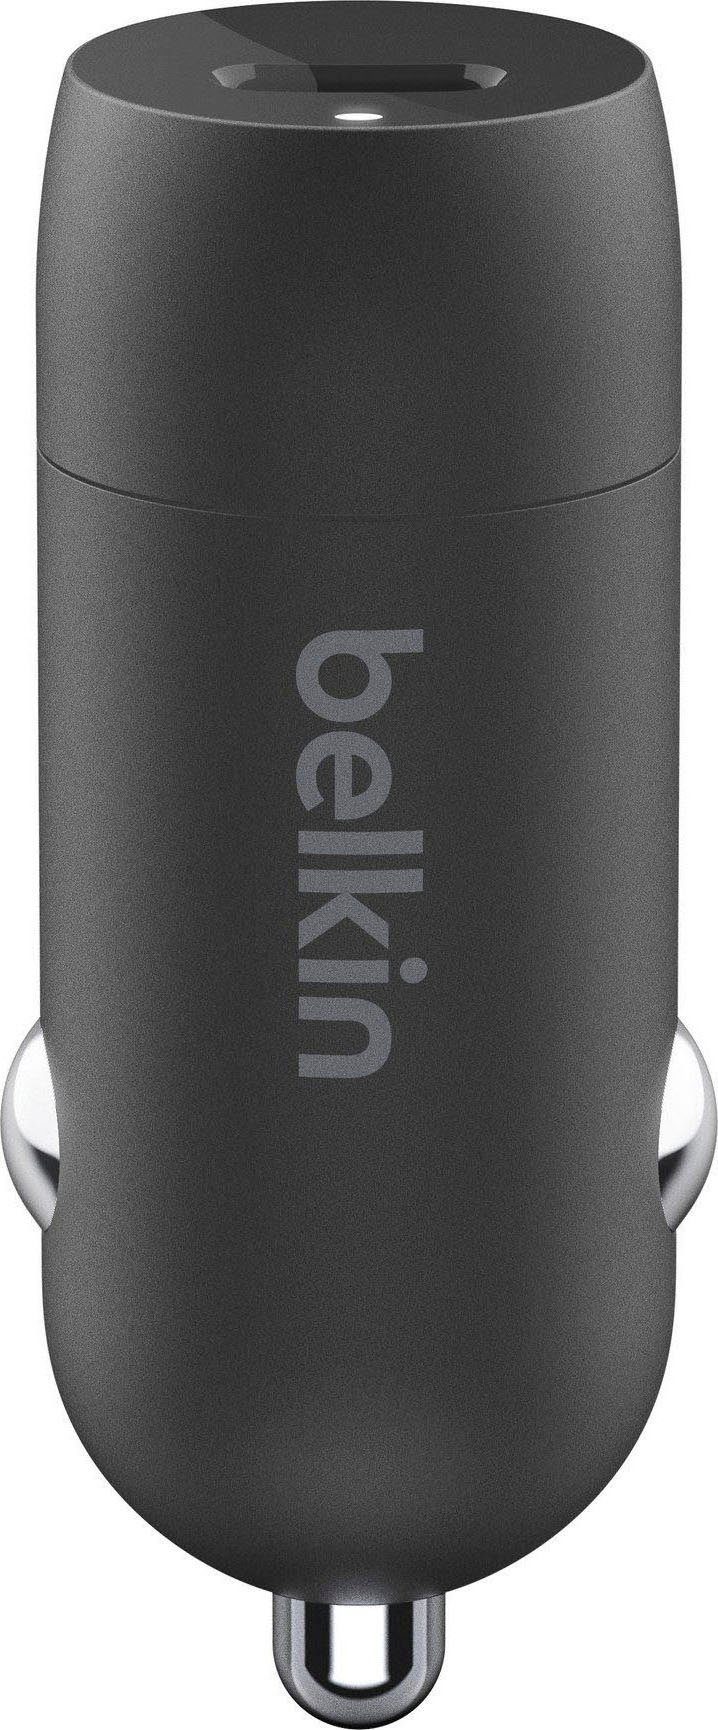 Belkin 20W mit Autobatterie-Ladegerät Delivery Kfz-Ladegerät USB-C Power